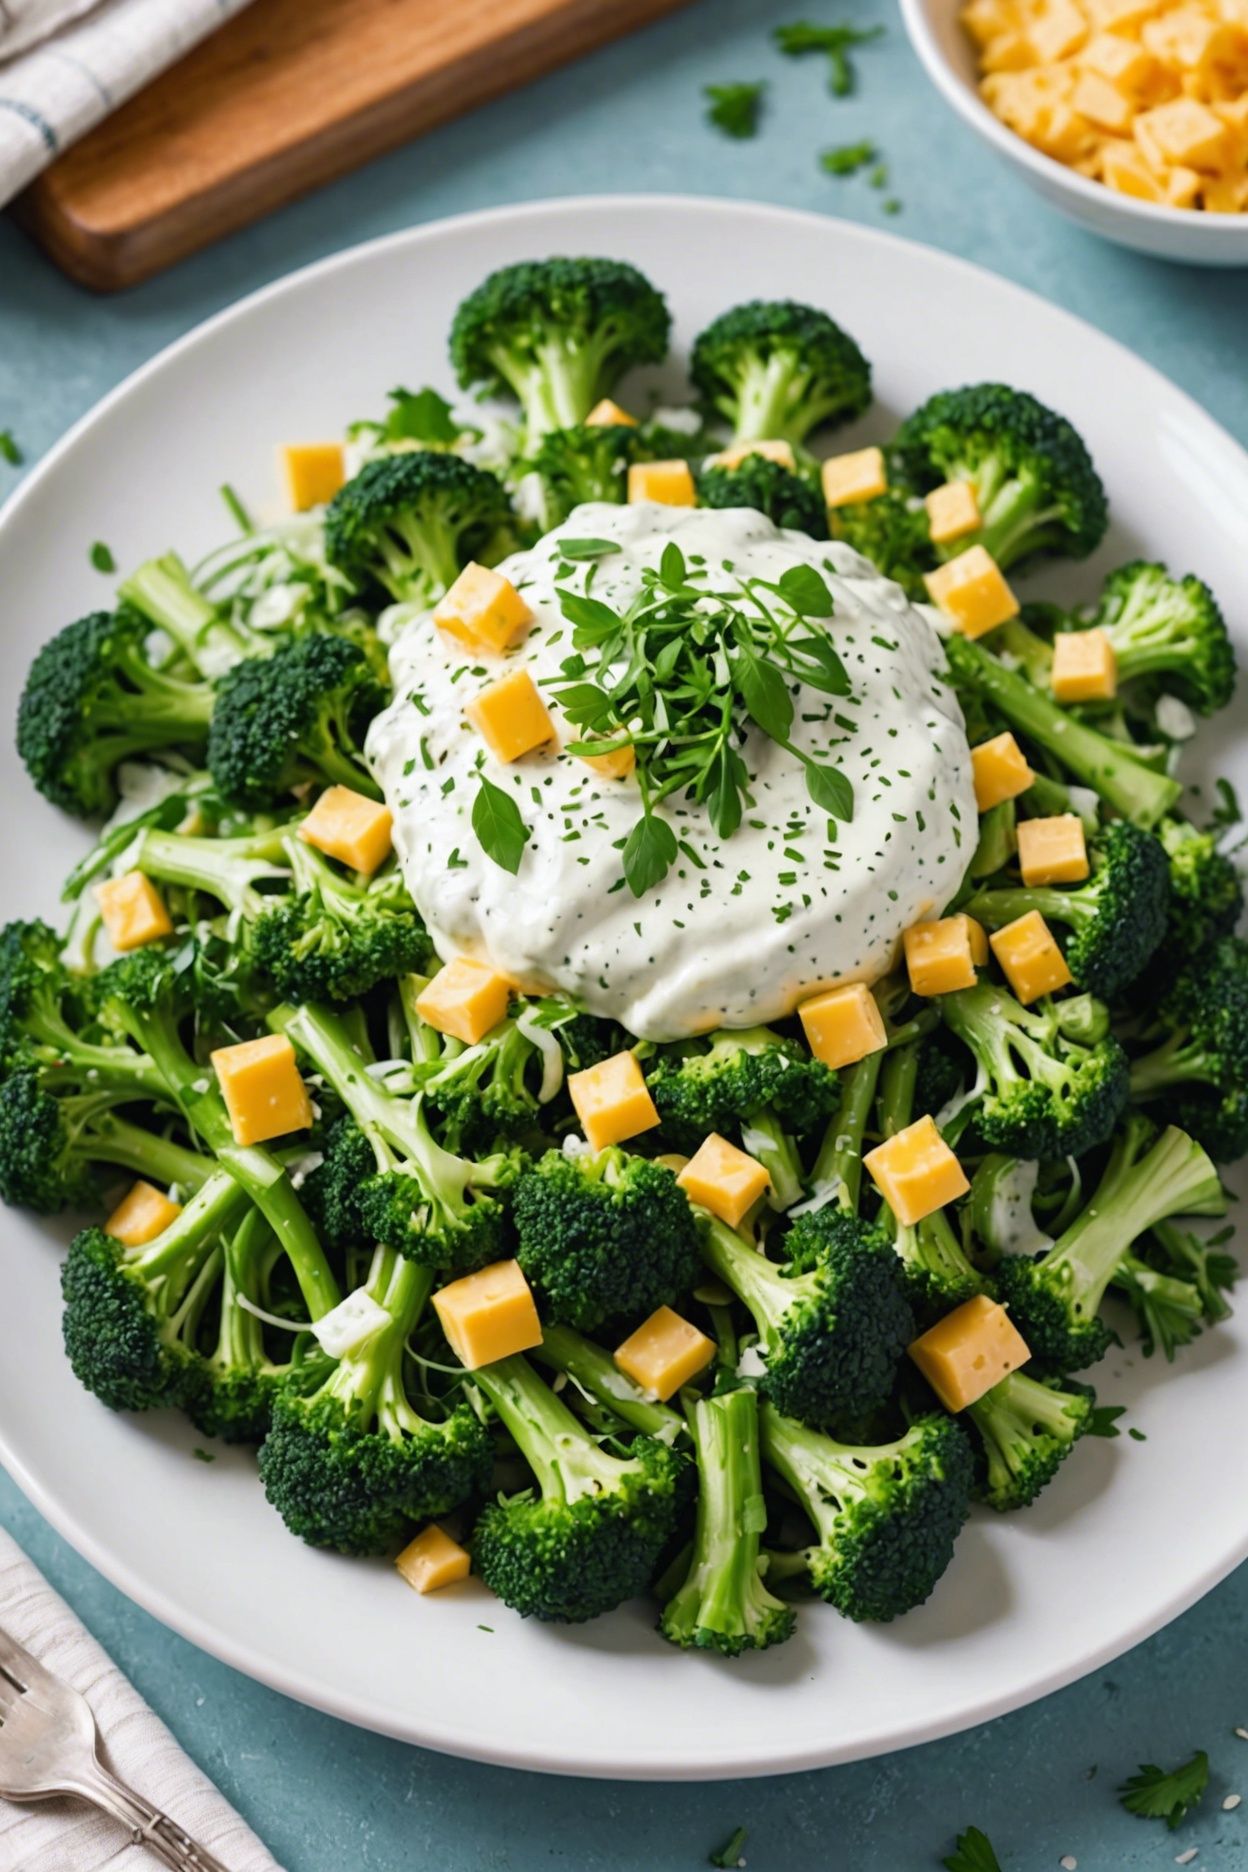 Creamy Broccoli Salad